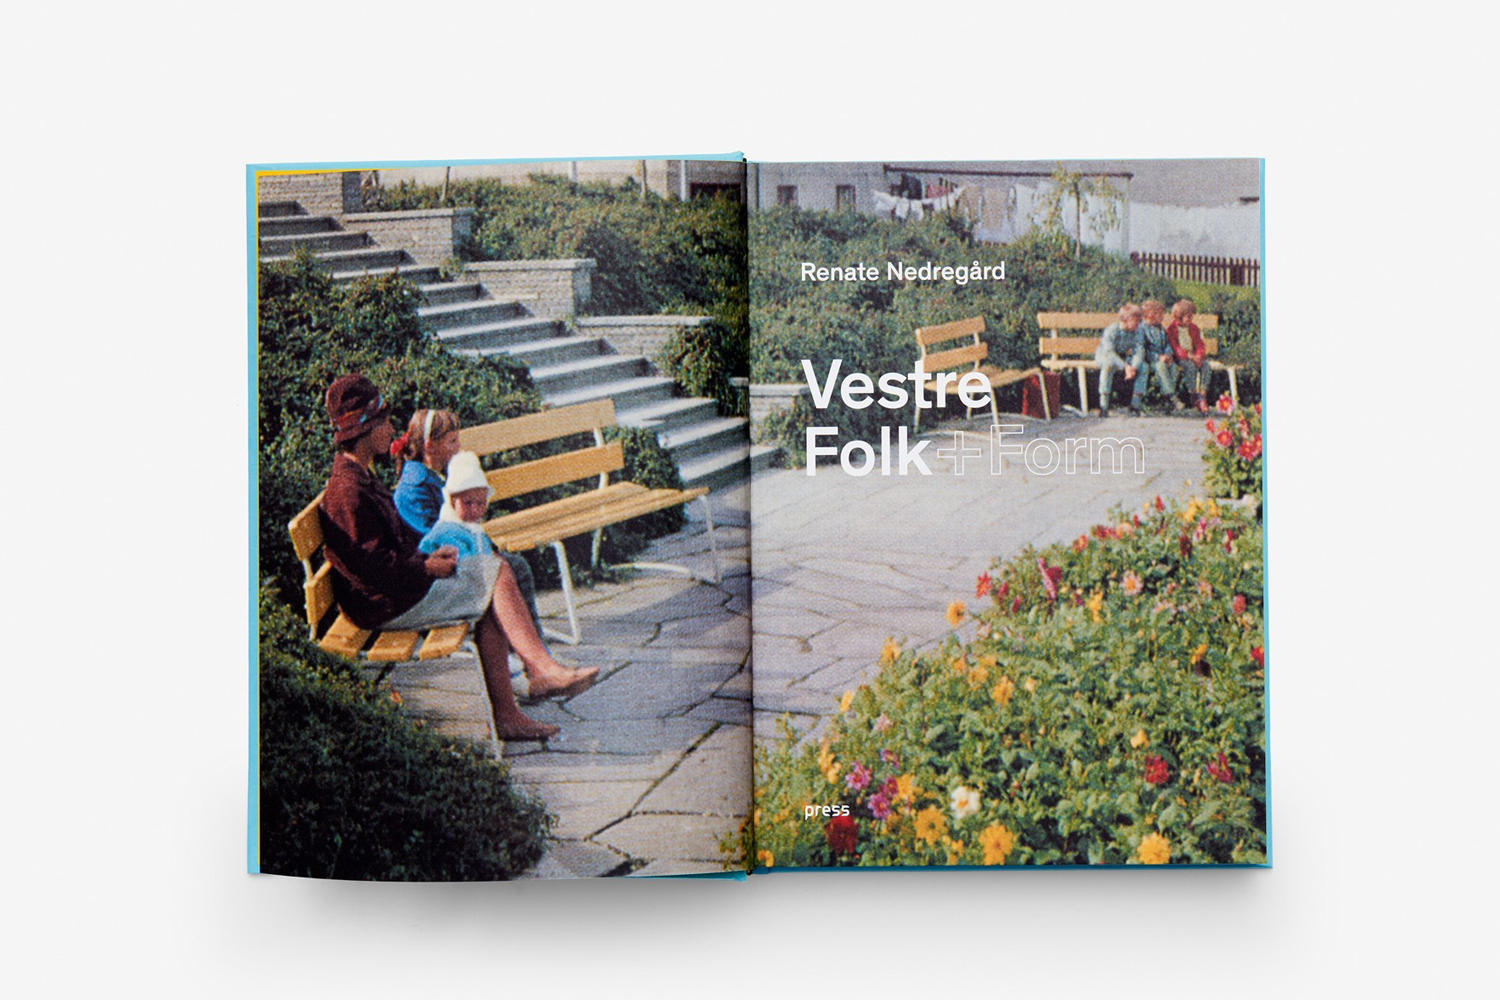 Folk+Form, a book designed by Snøhetta celebrating the legacy of Norwegian furniture manufacturer Vestre